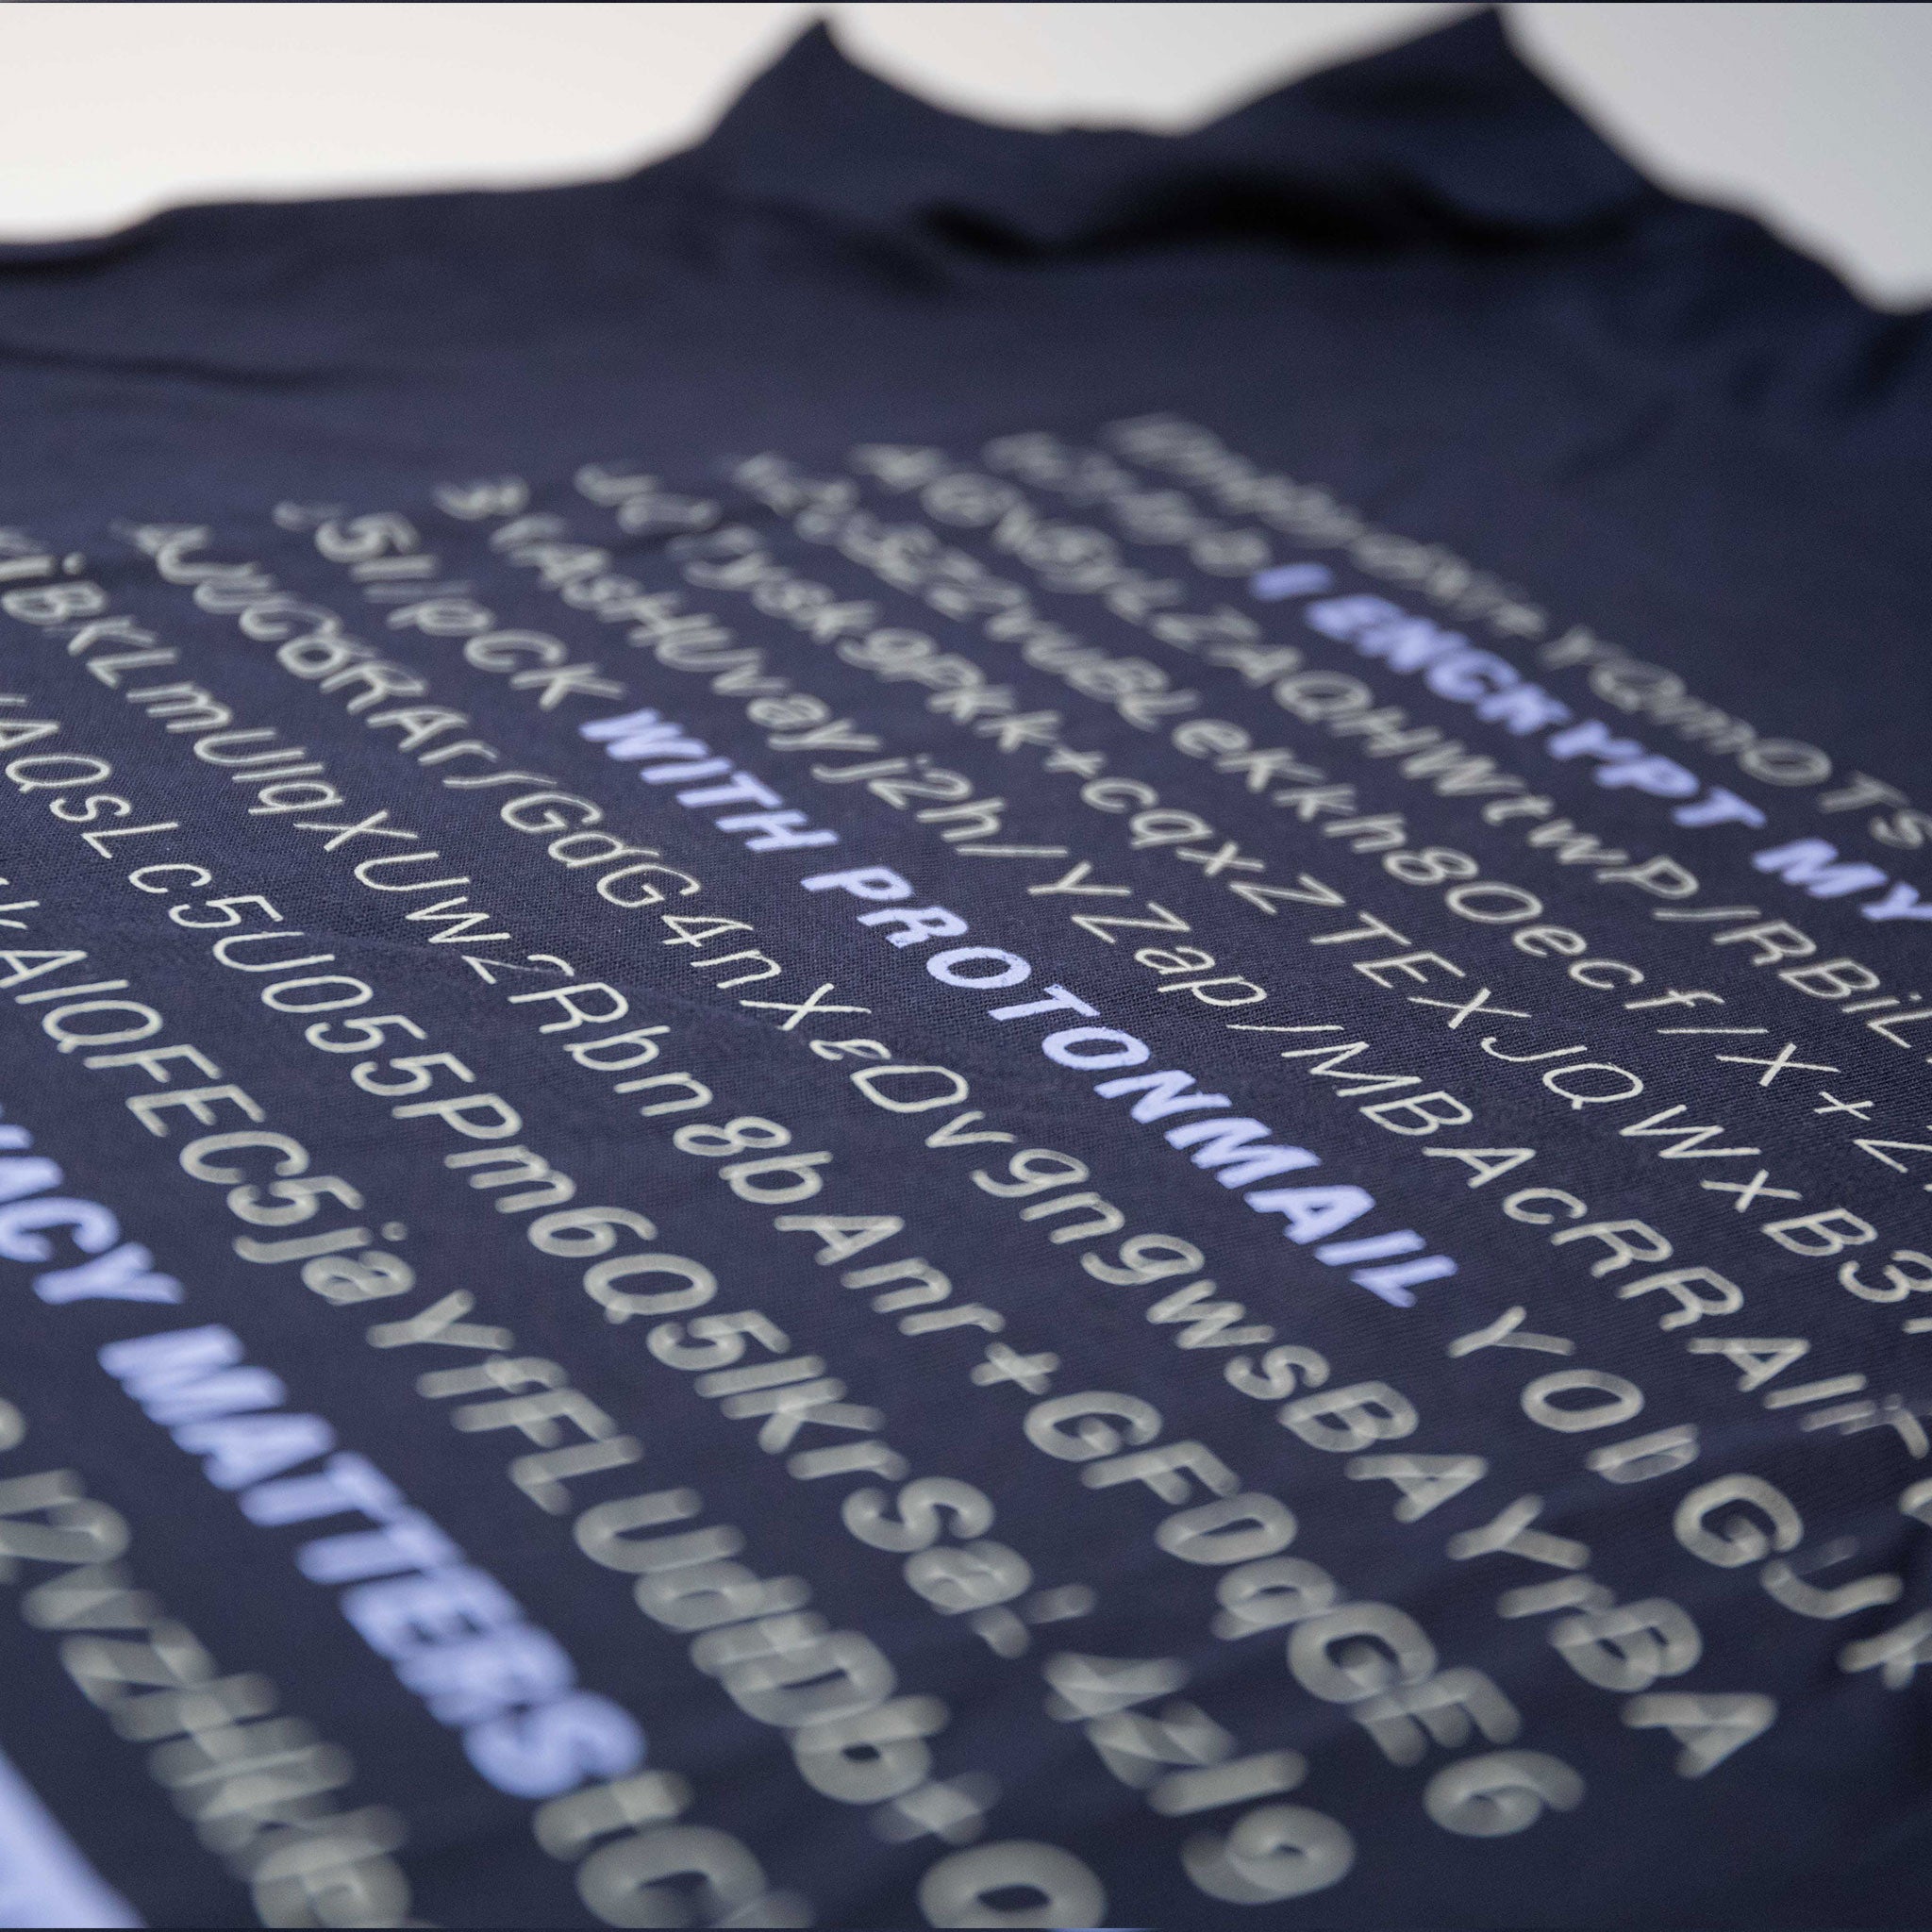 <transcy>Женская футболка Encrypted</transcy>